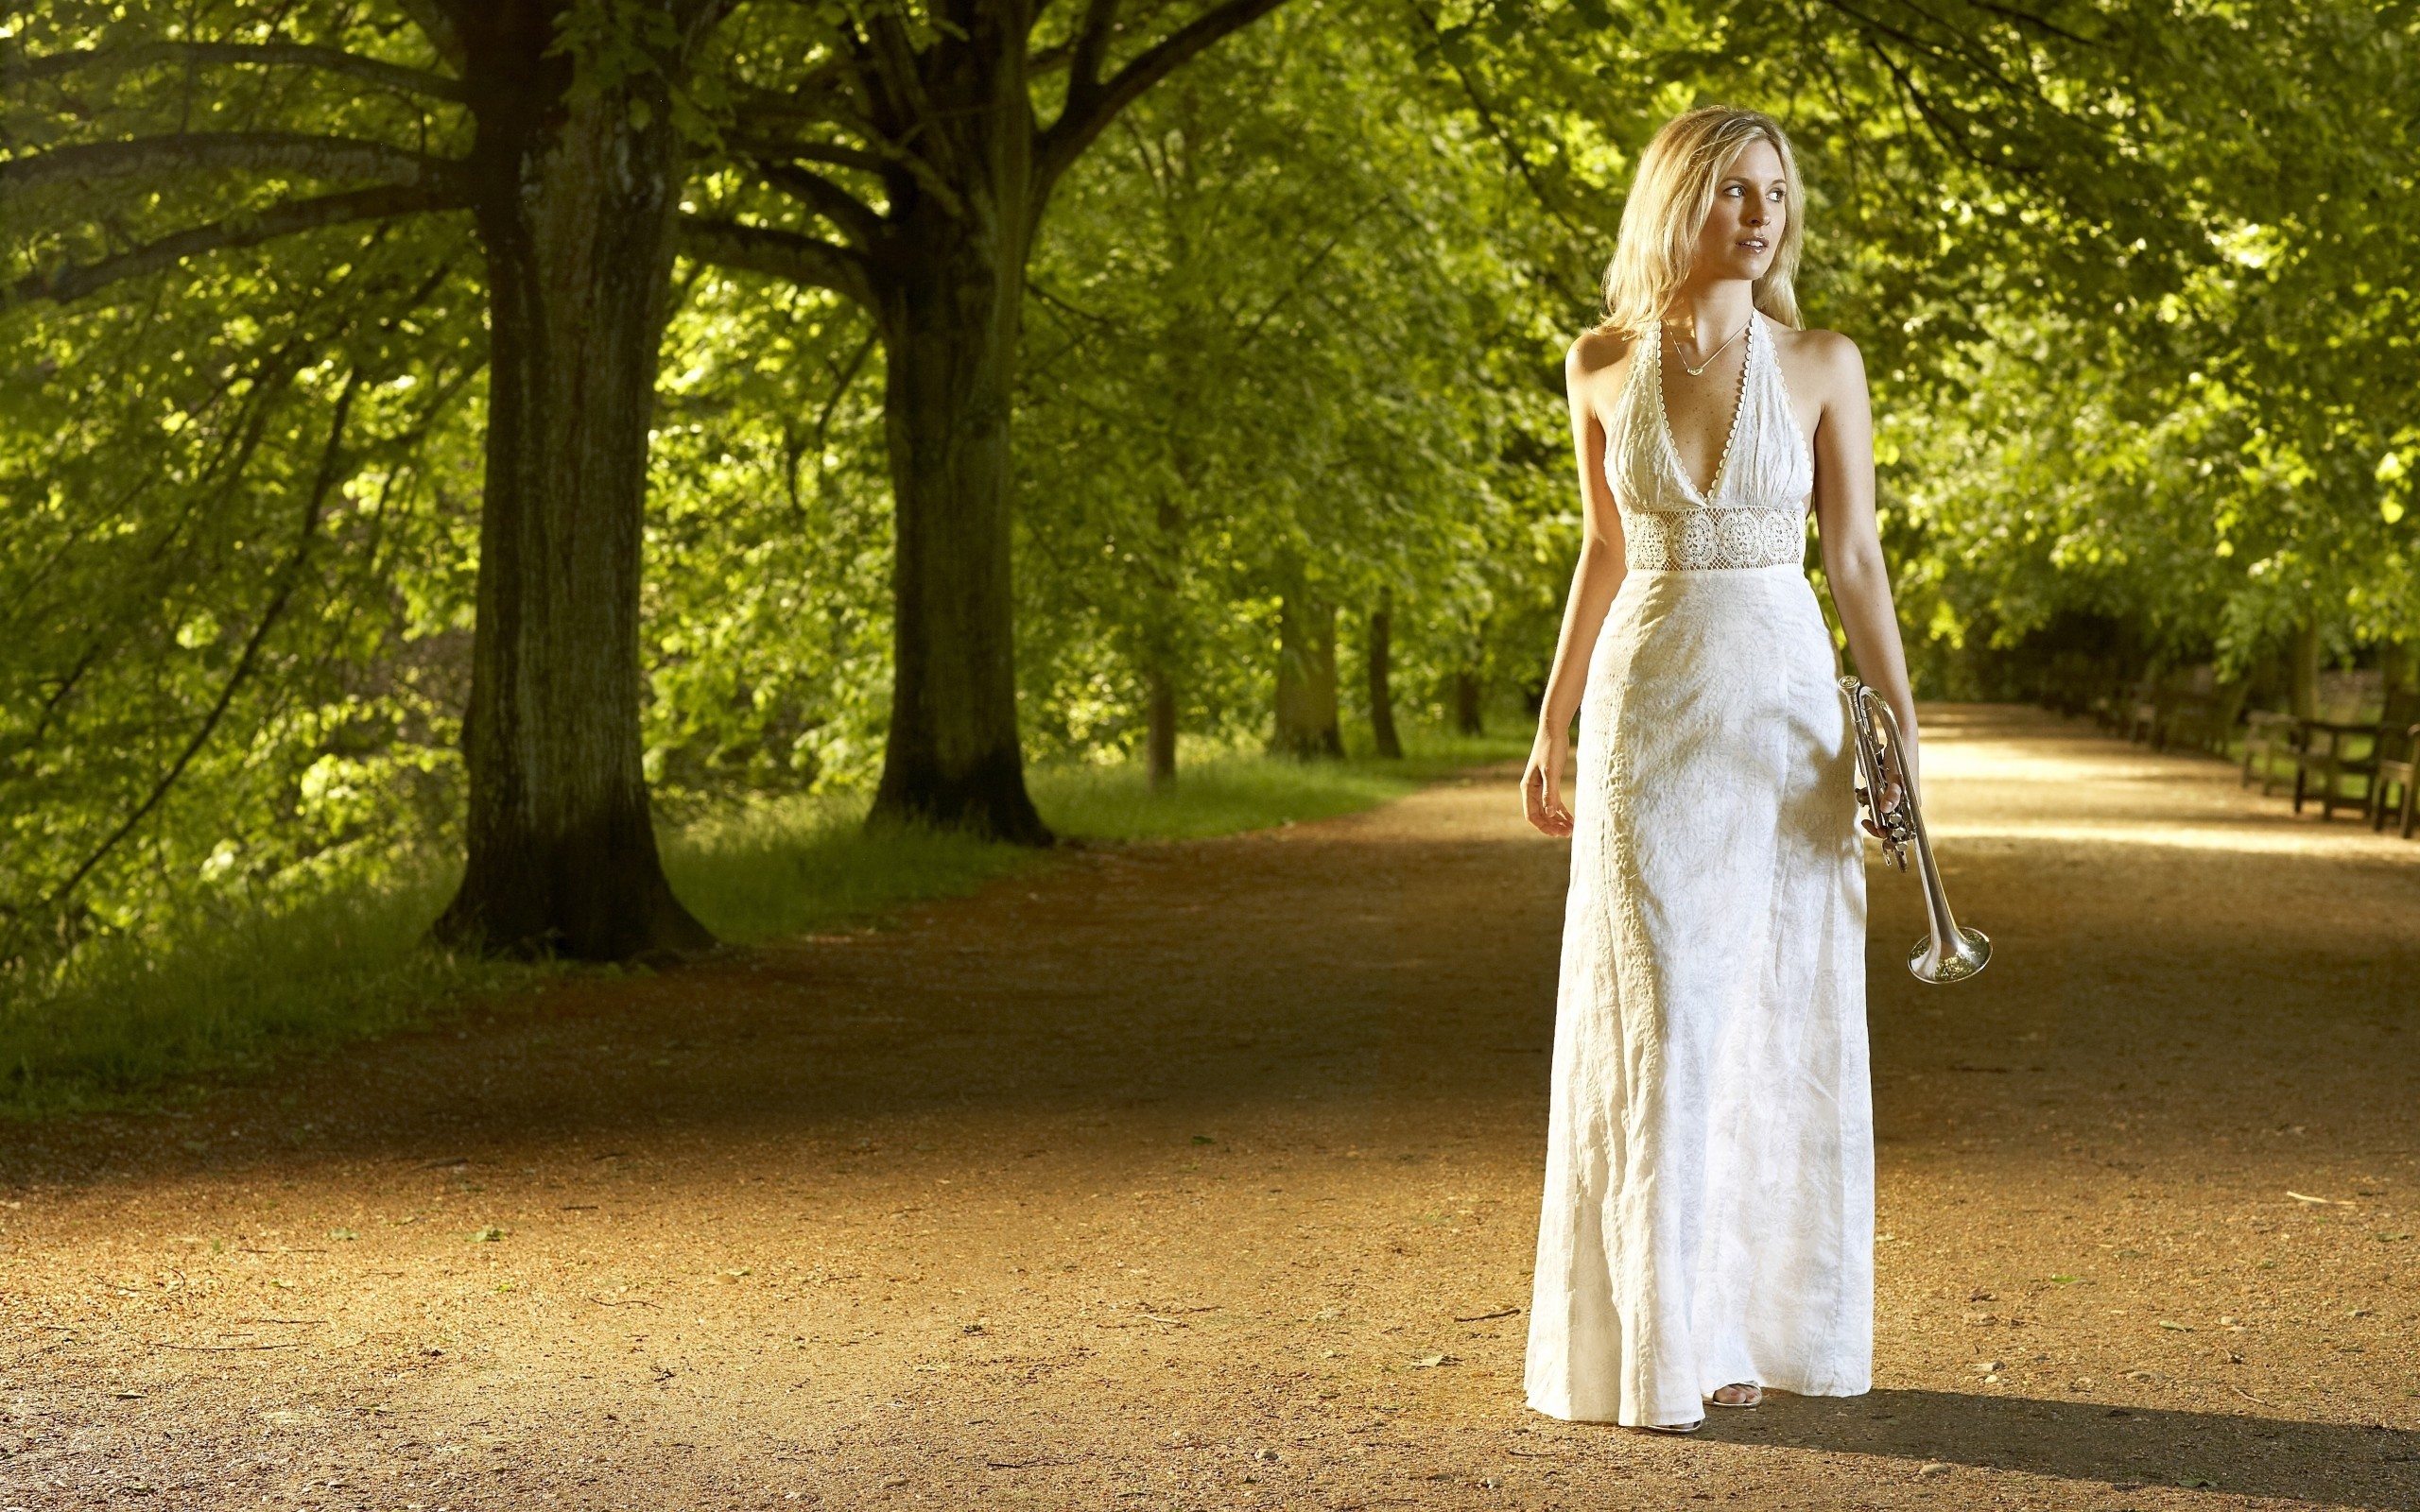 Women Model Long Hair Women Outdoors Trees White Dress Park Bench Trumpets Shadow Blonde 2560x1600